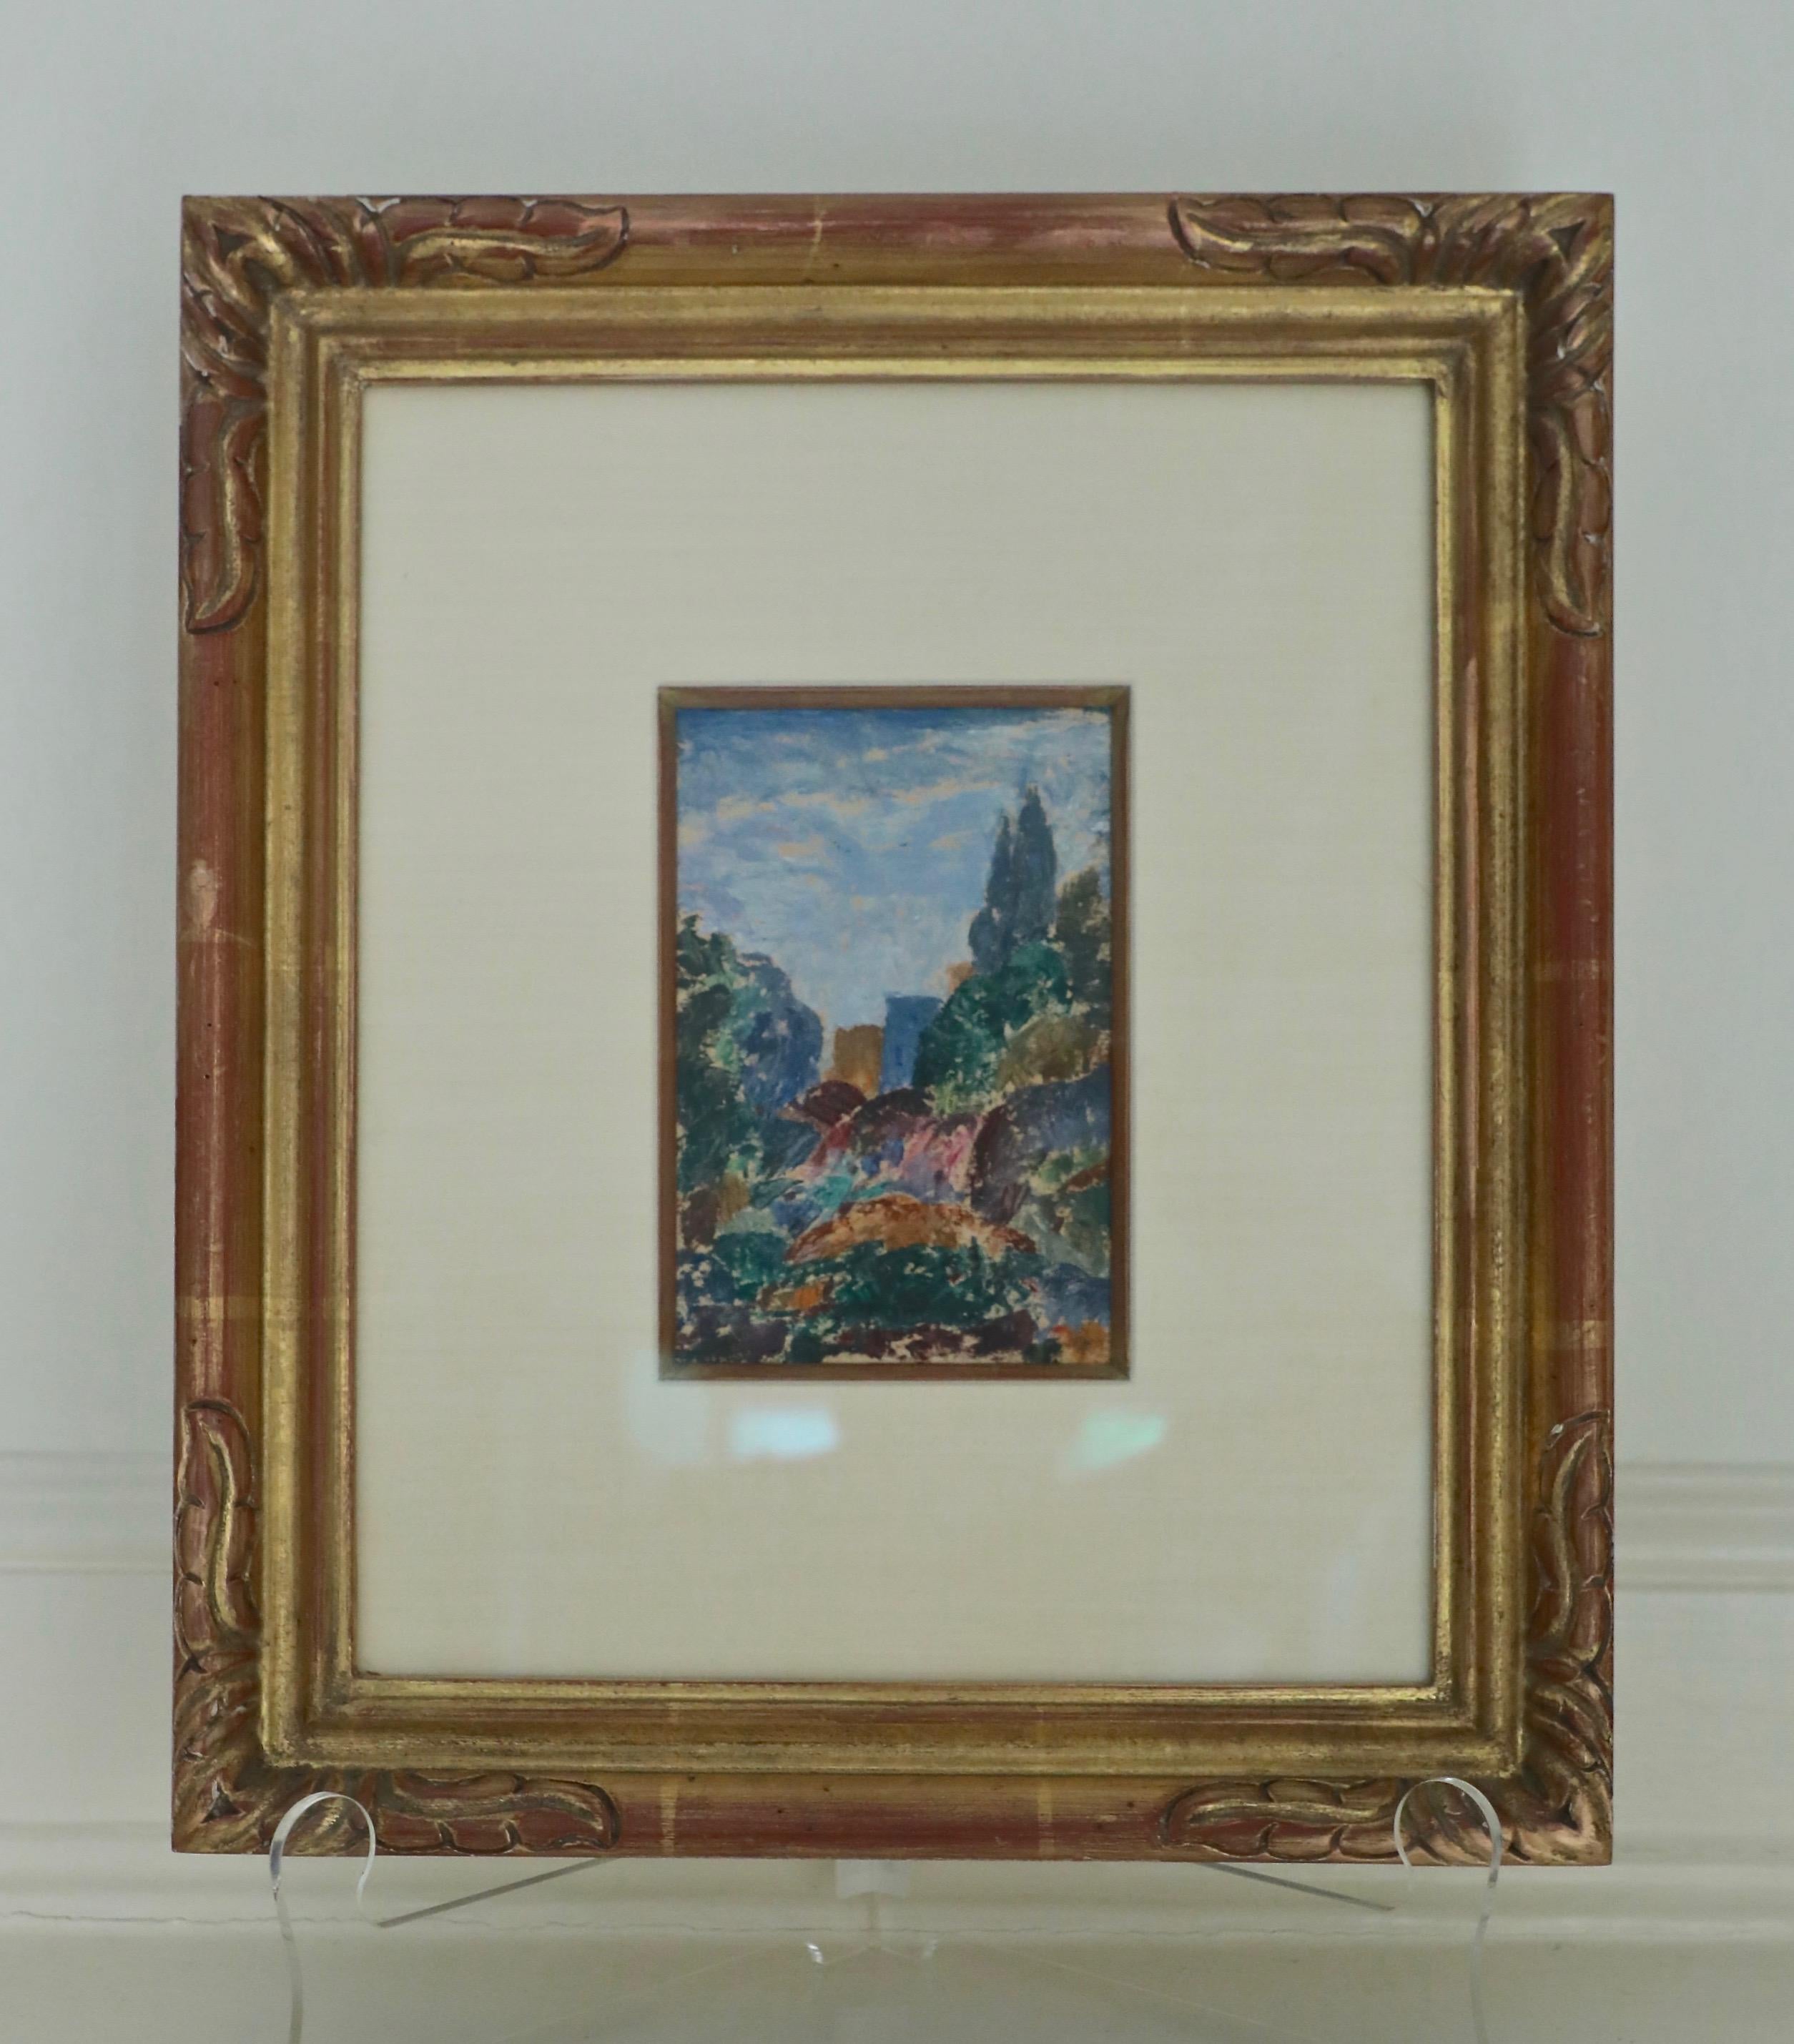 Joseph Sacks Landscape Painting - Impressionist Oil on Paper Landscape